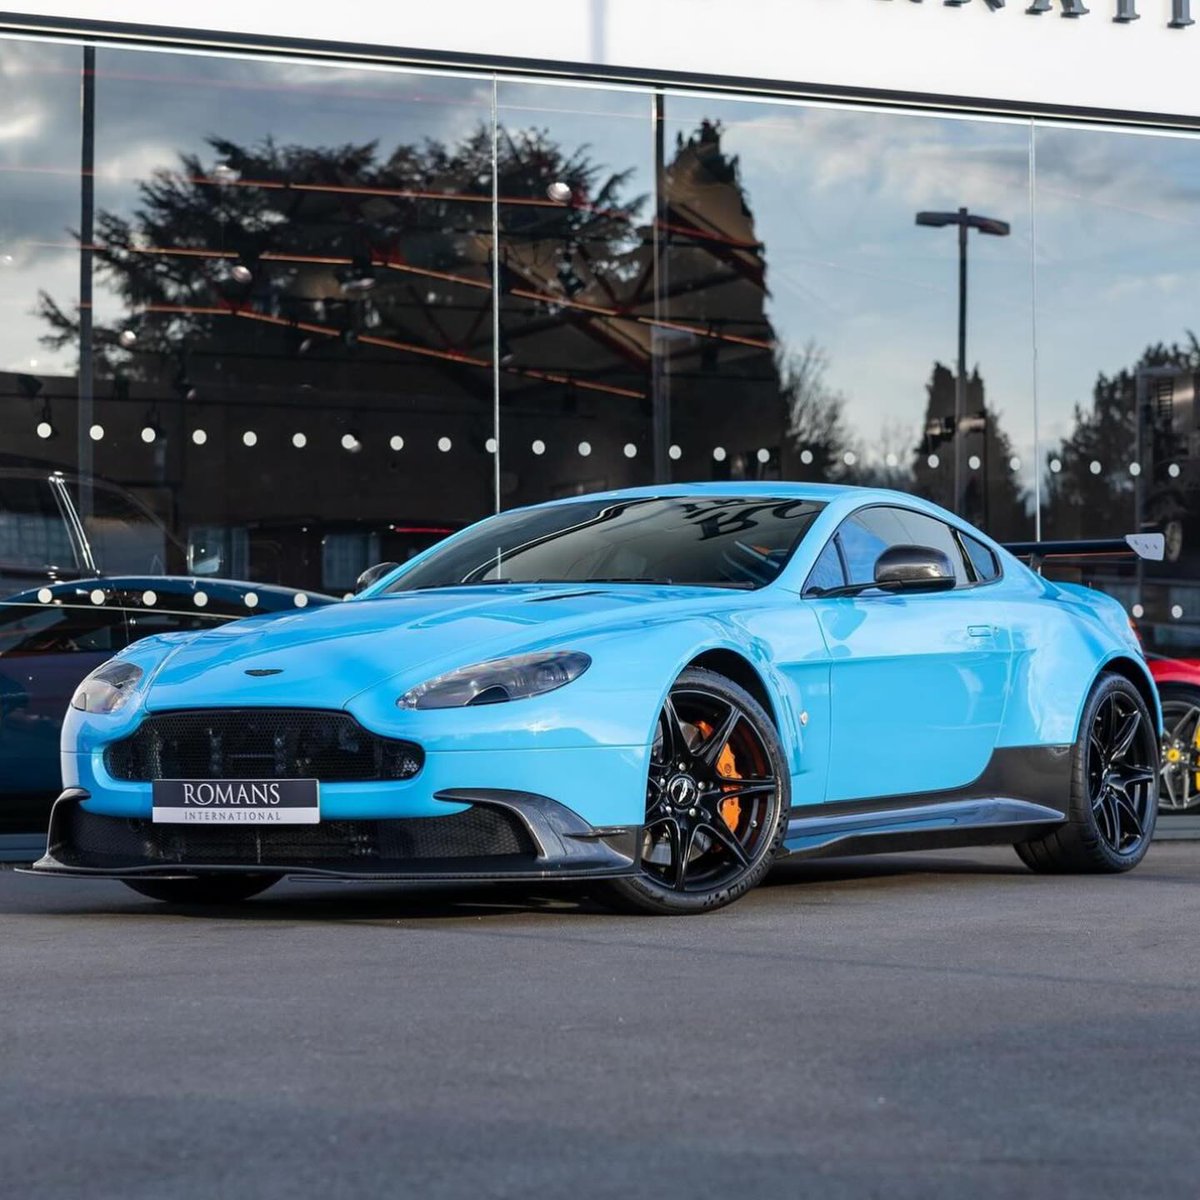 Aston Martin Vantage GT8 
📸 @romansinternational
#astonmartin #vantage #vantagegt8 #gt8 #astonmartinvantagegt8